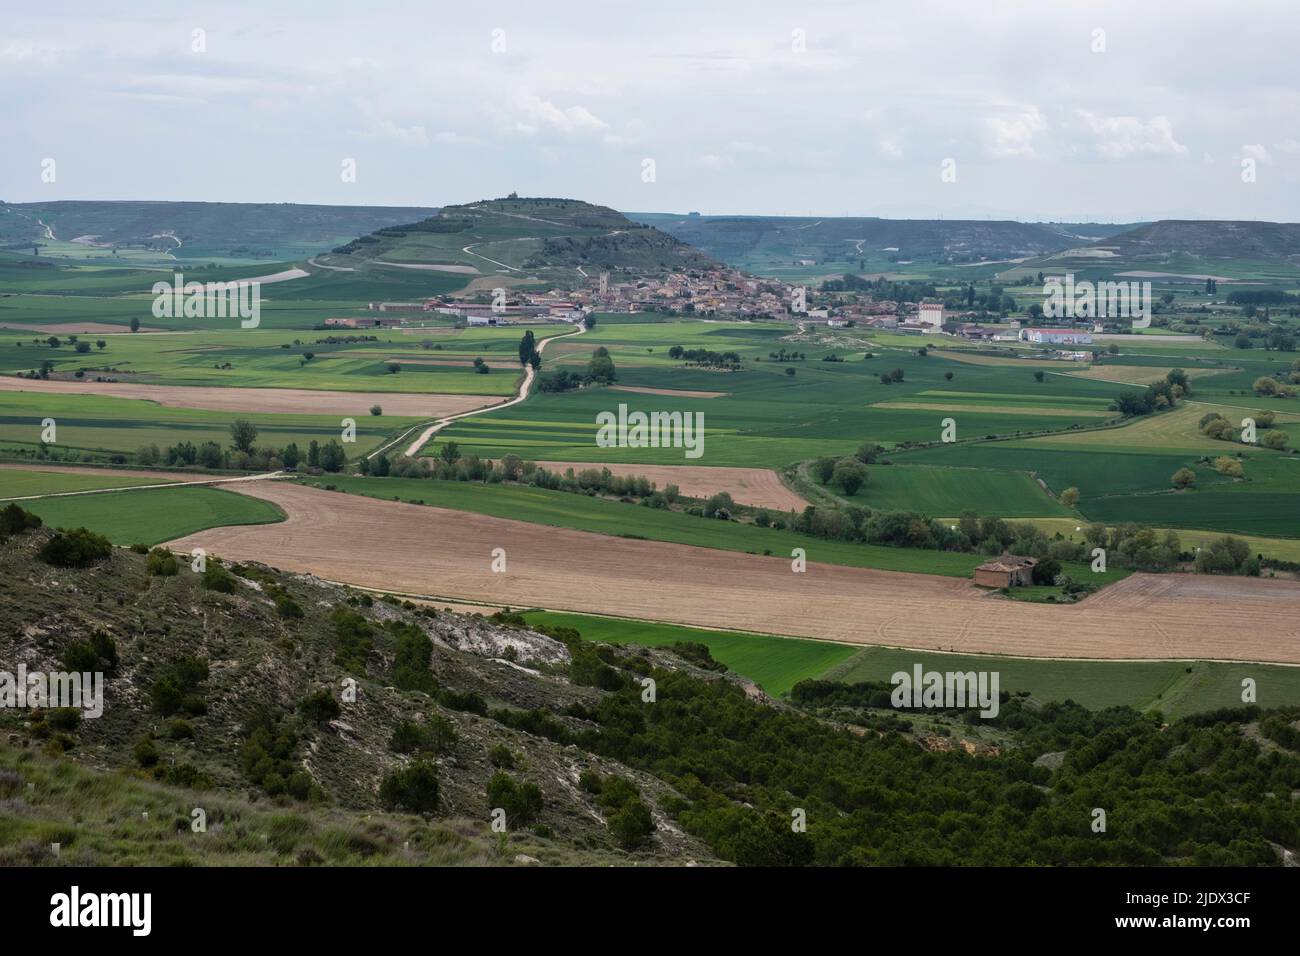 Espagne, Castilla y Leon, en regardant vers Castrojeriz de la Camino de Santiago, en passant par les terres agricoles en premier plan. Banque D'Images